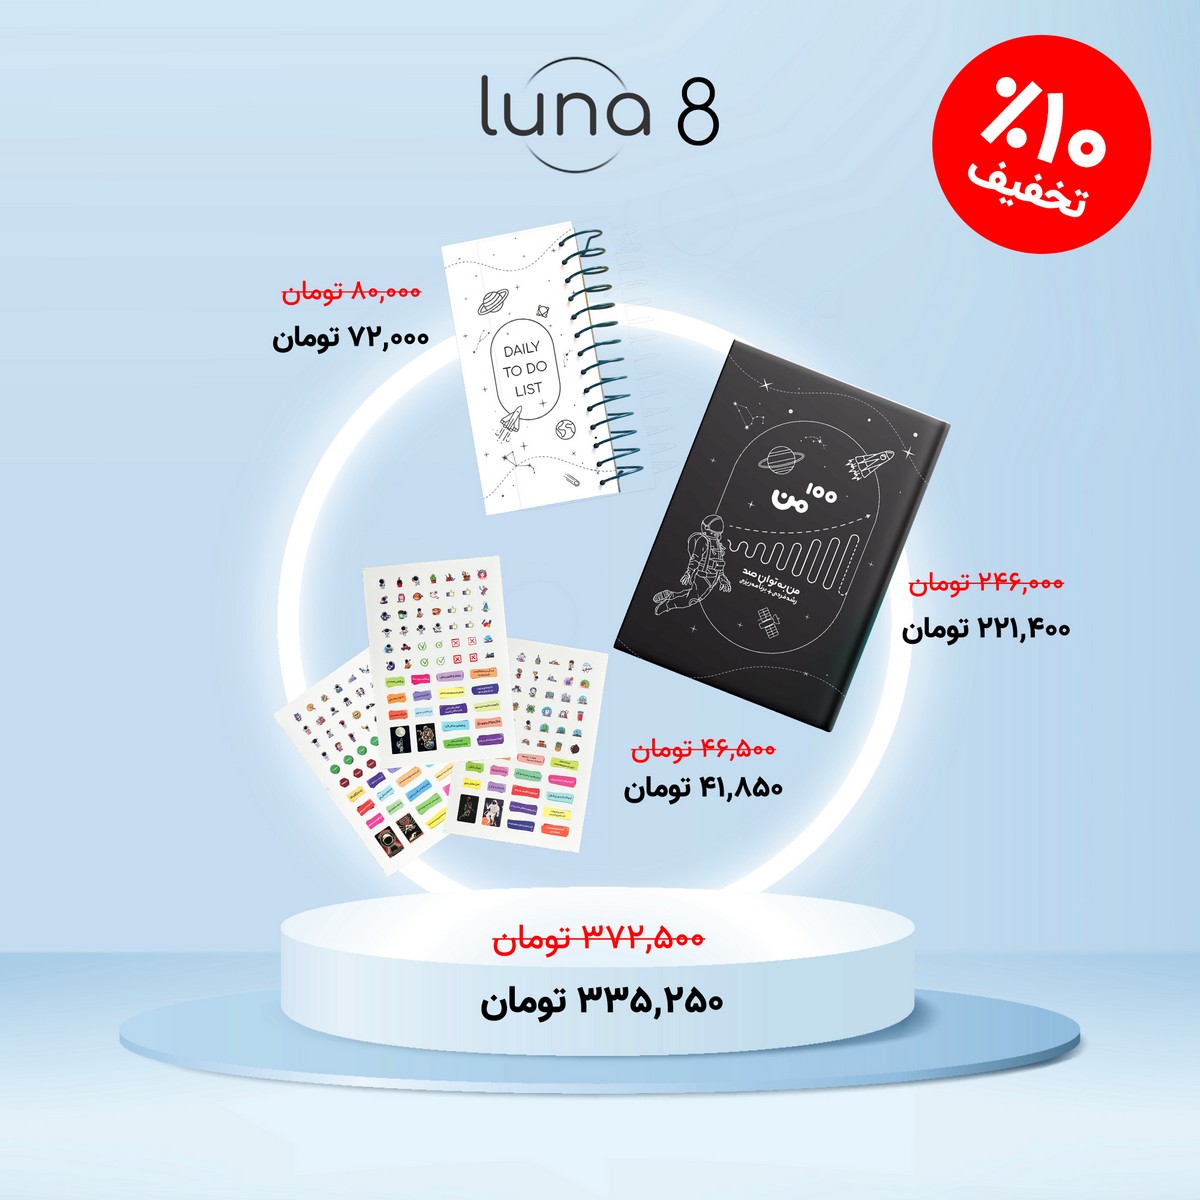 پکیج Luna8